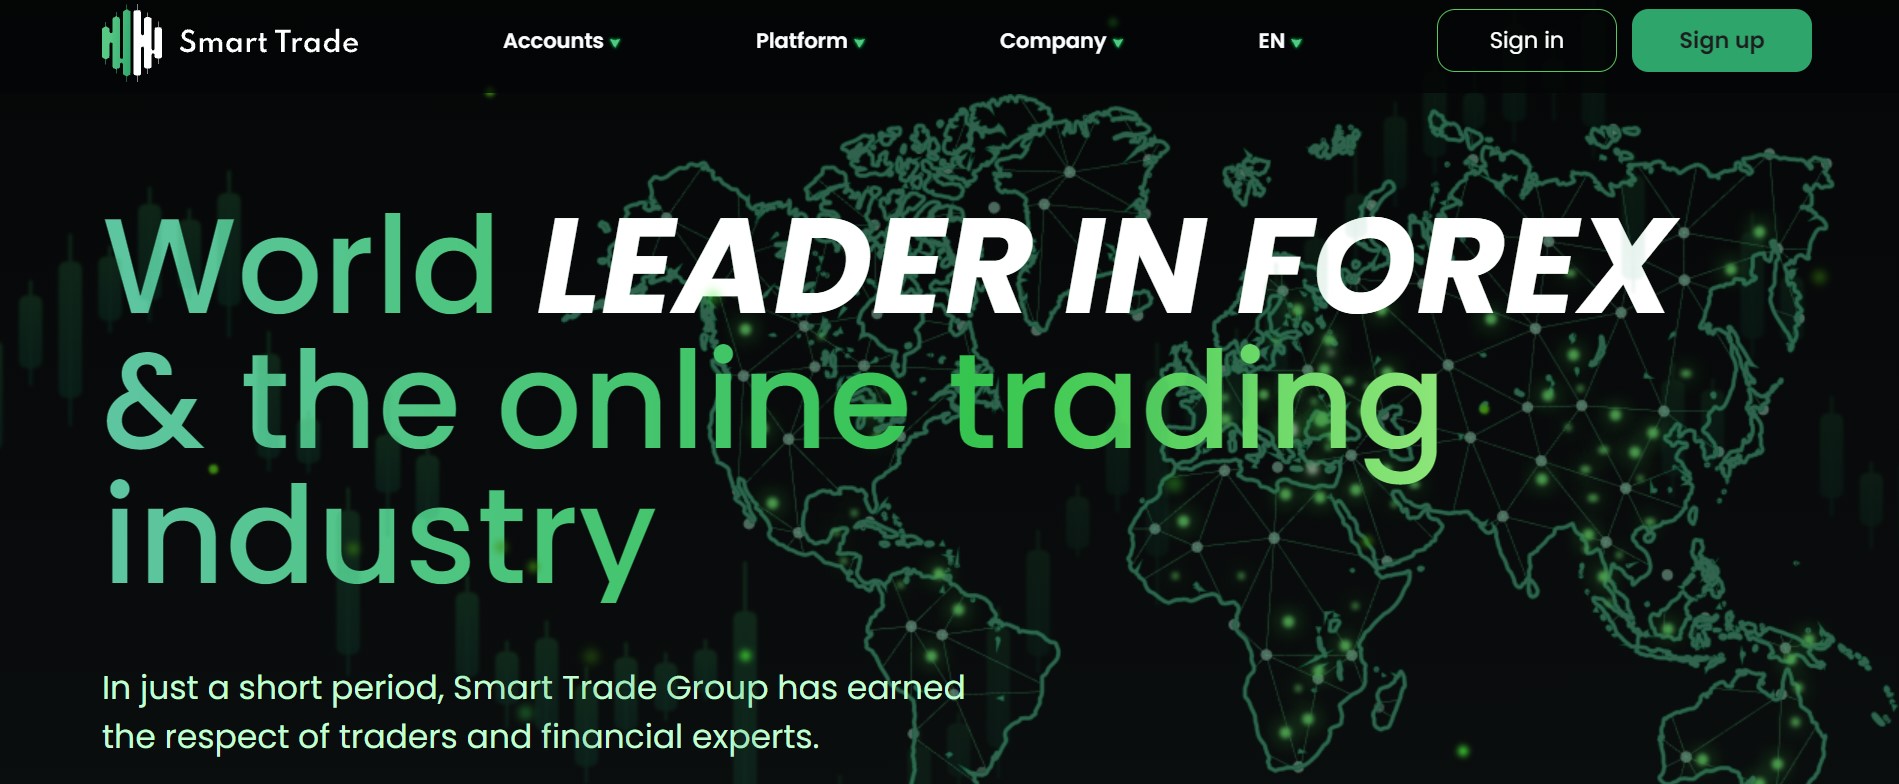 Smart Trade Group website